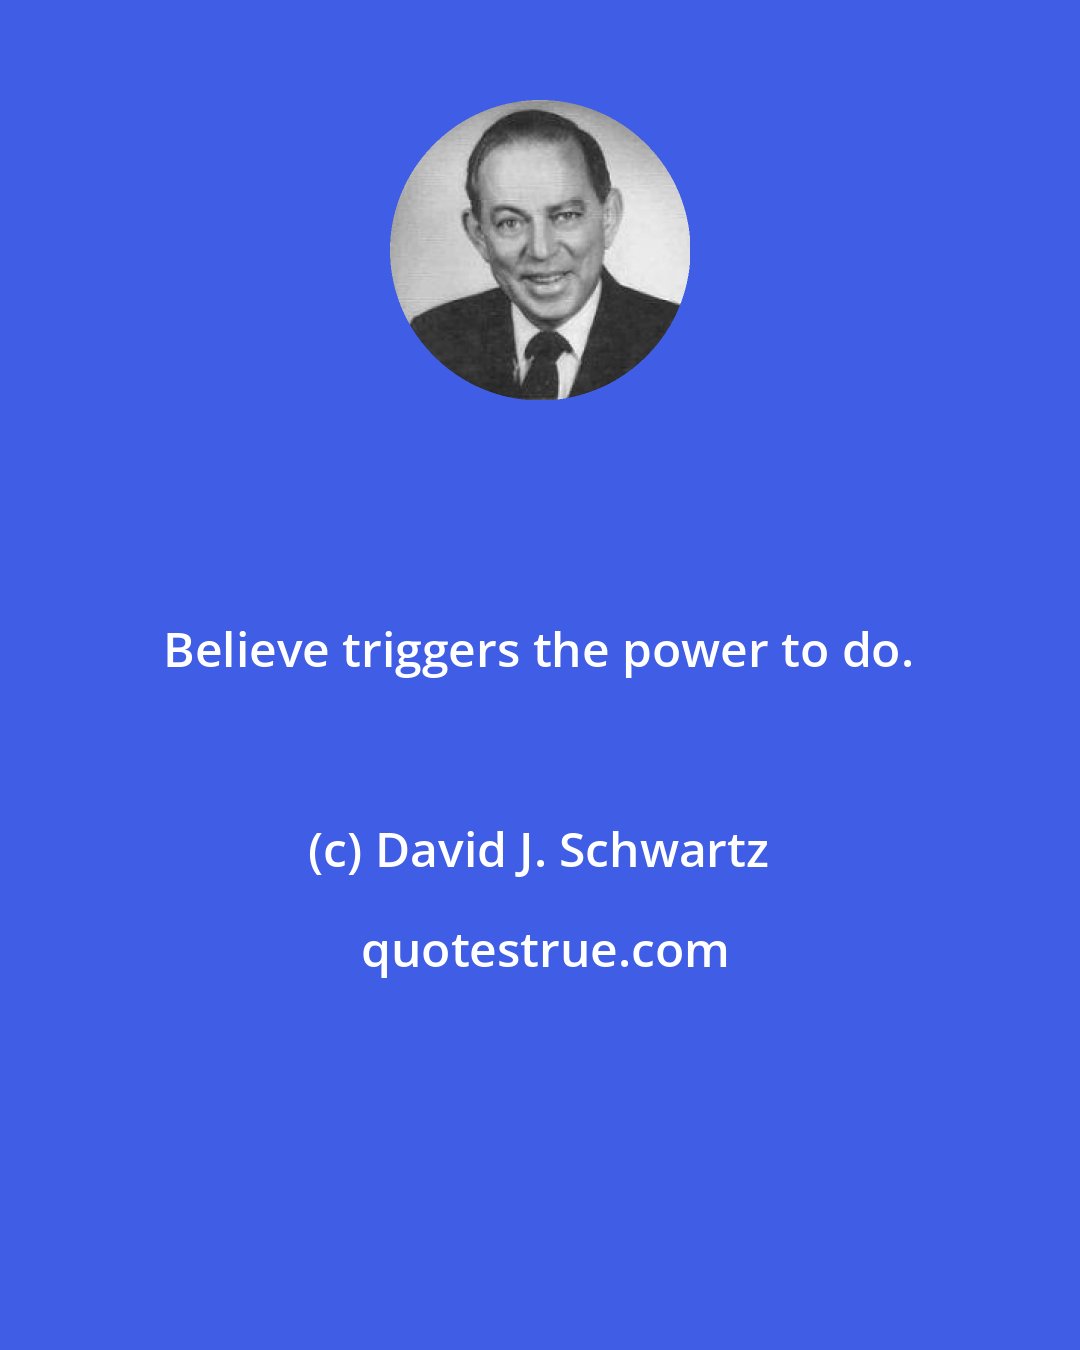 David J. Schwartz: Believe triggers the power to do.